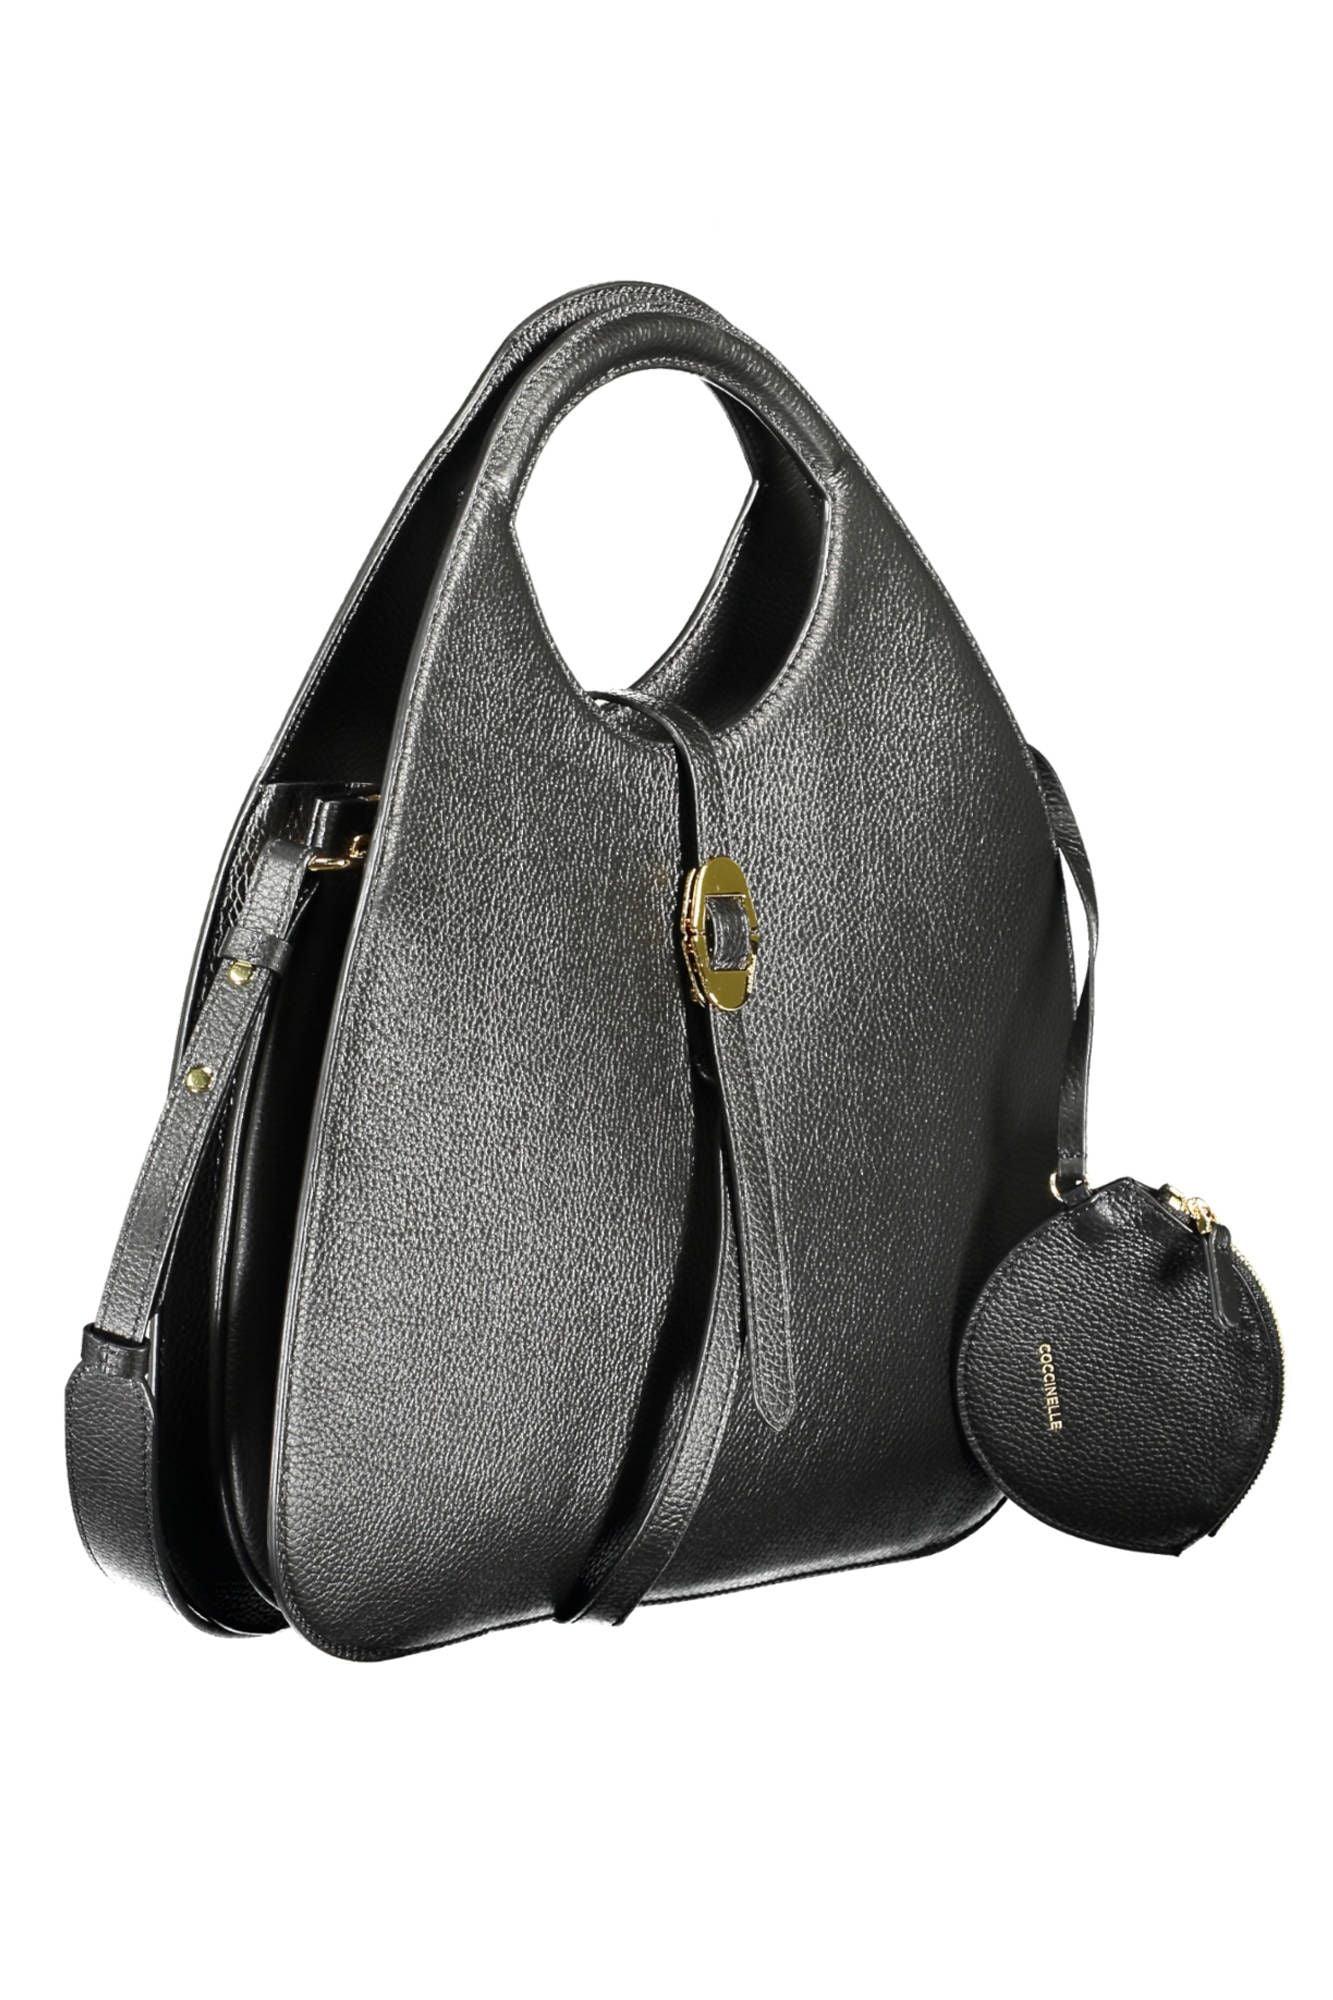 Coccinelle Elegant Black Leather Handbag with Removable Strap - PER.FASHION